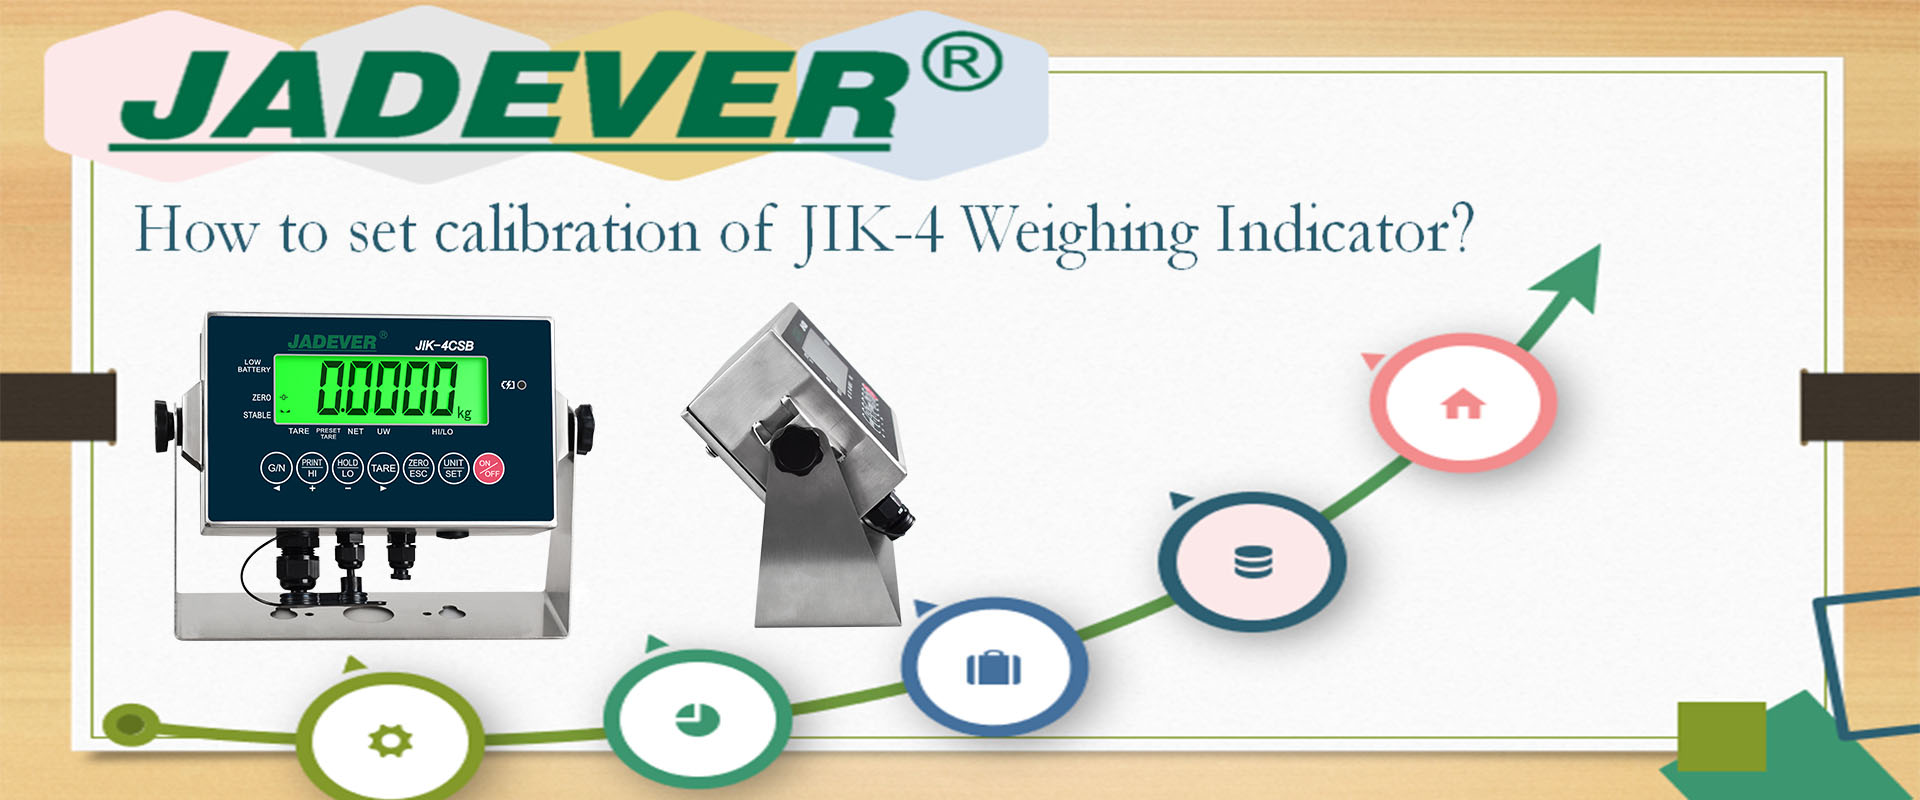 How to set calibration of JIK-4 weighing indicator?